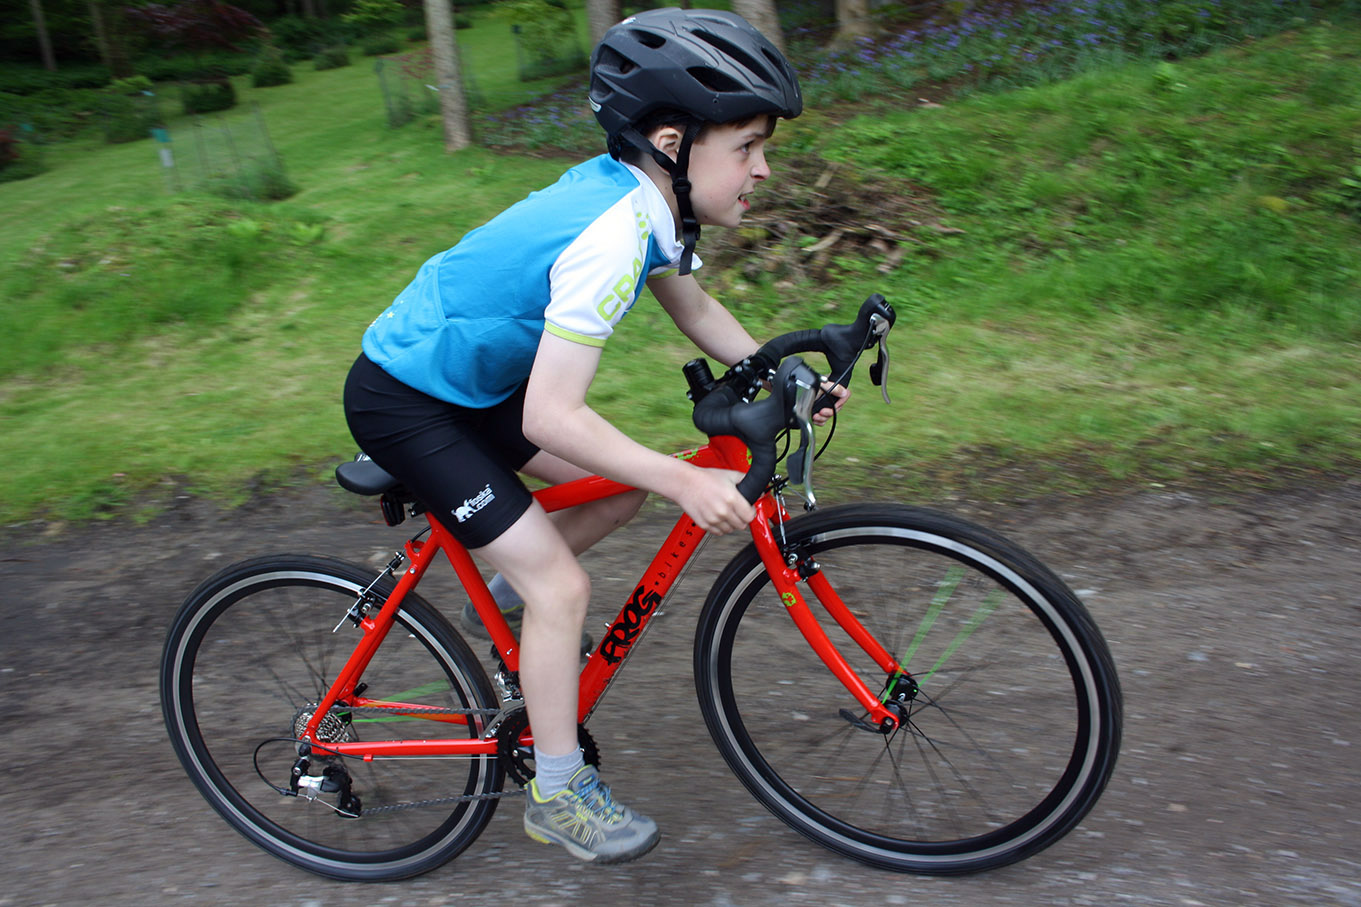 racing bicycle for kids